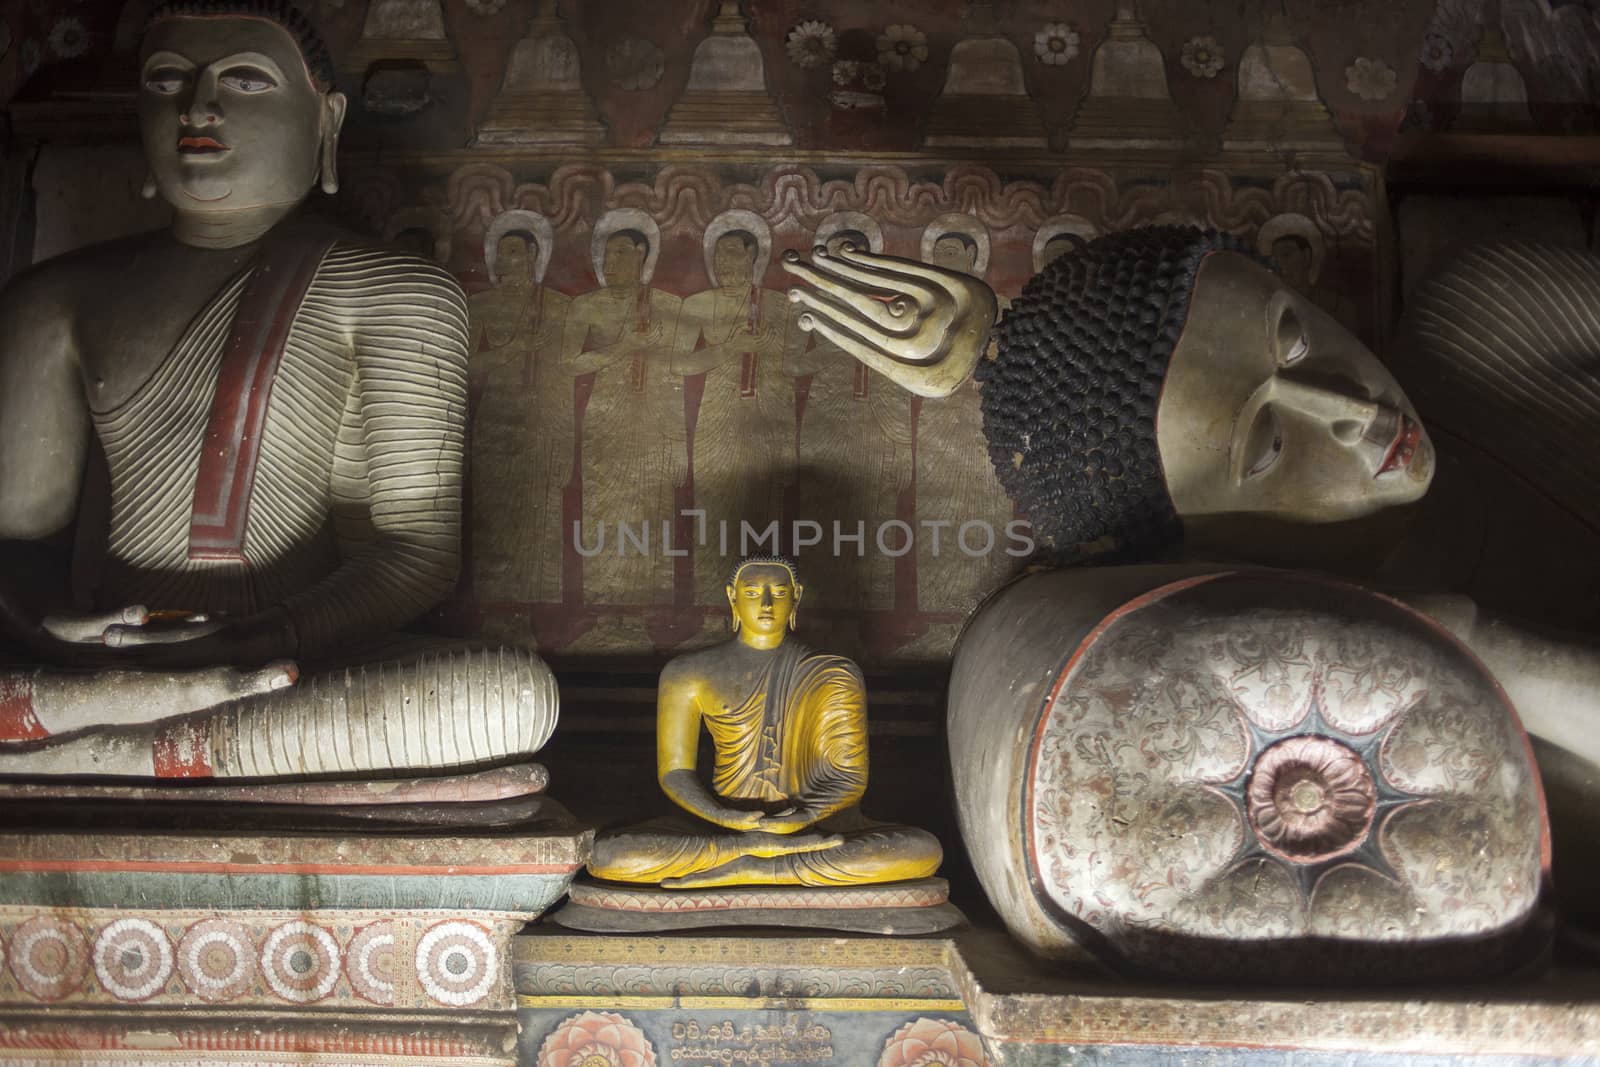 Group of statues inside Dambula cave temple in Sri Lanka. Indoors.